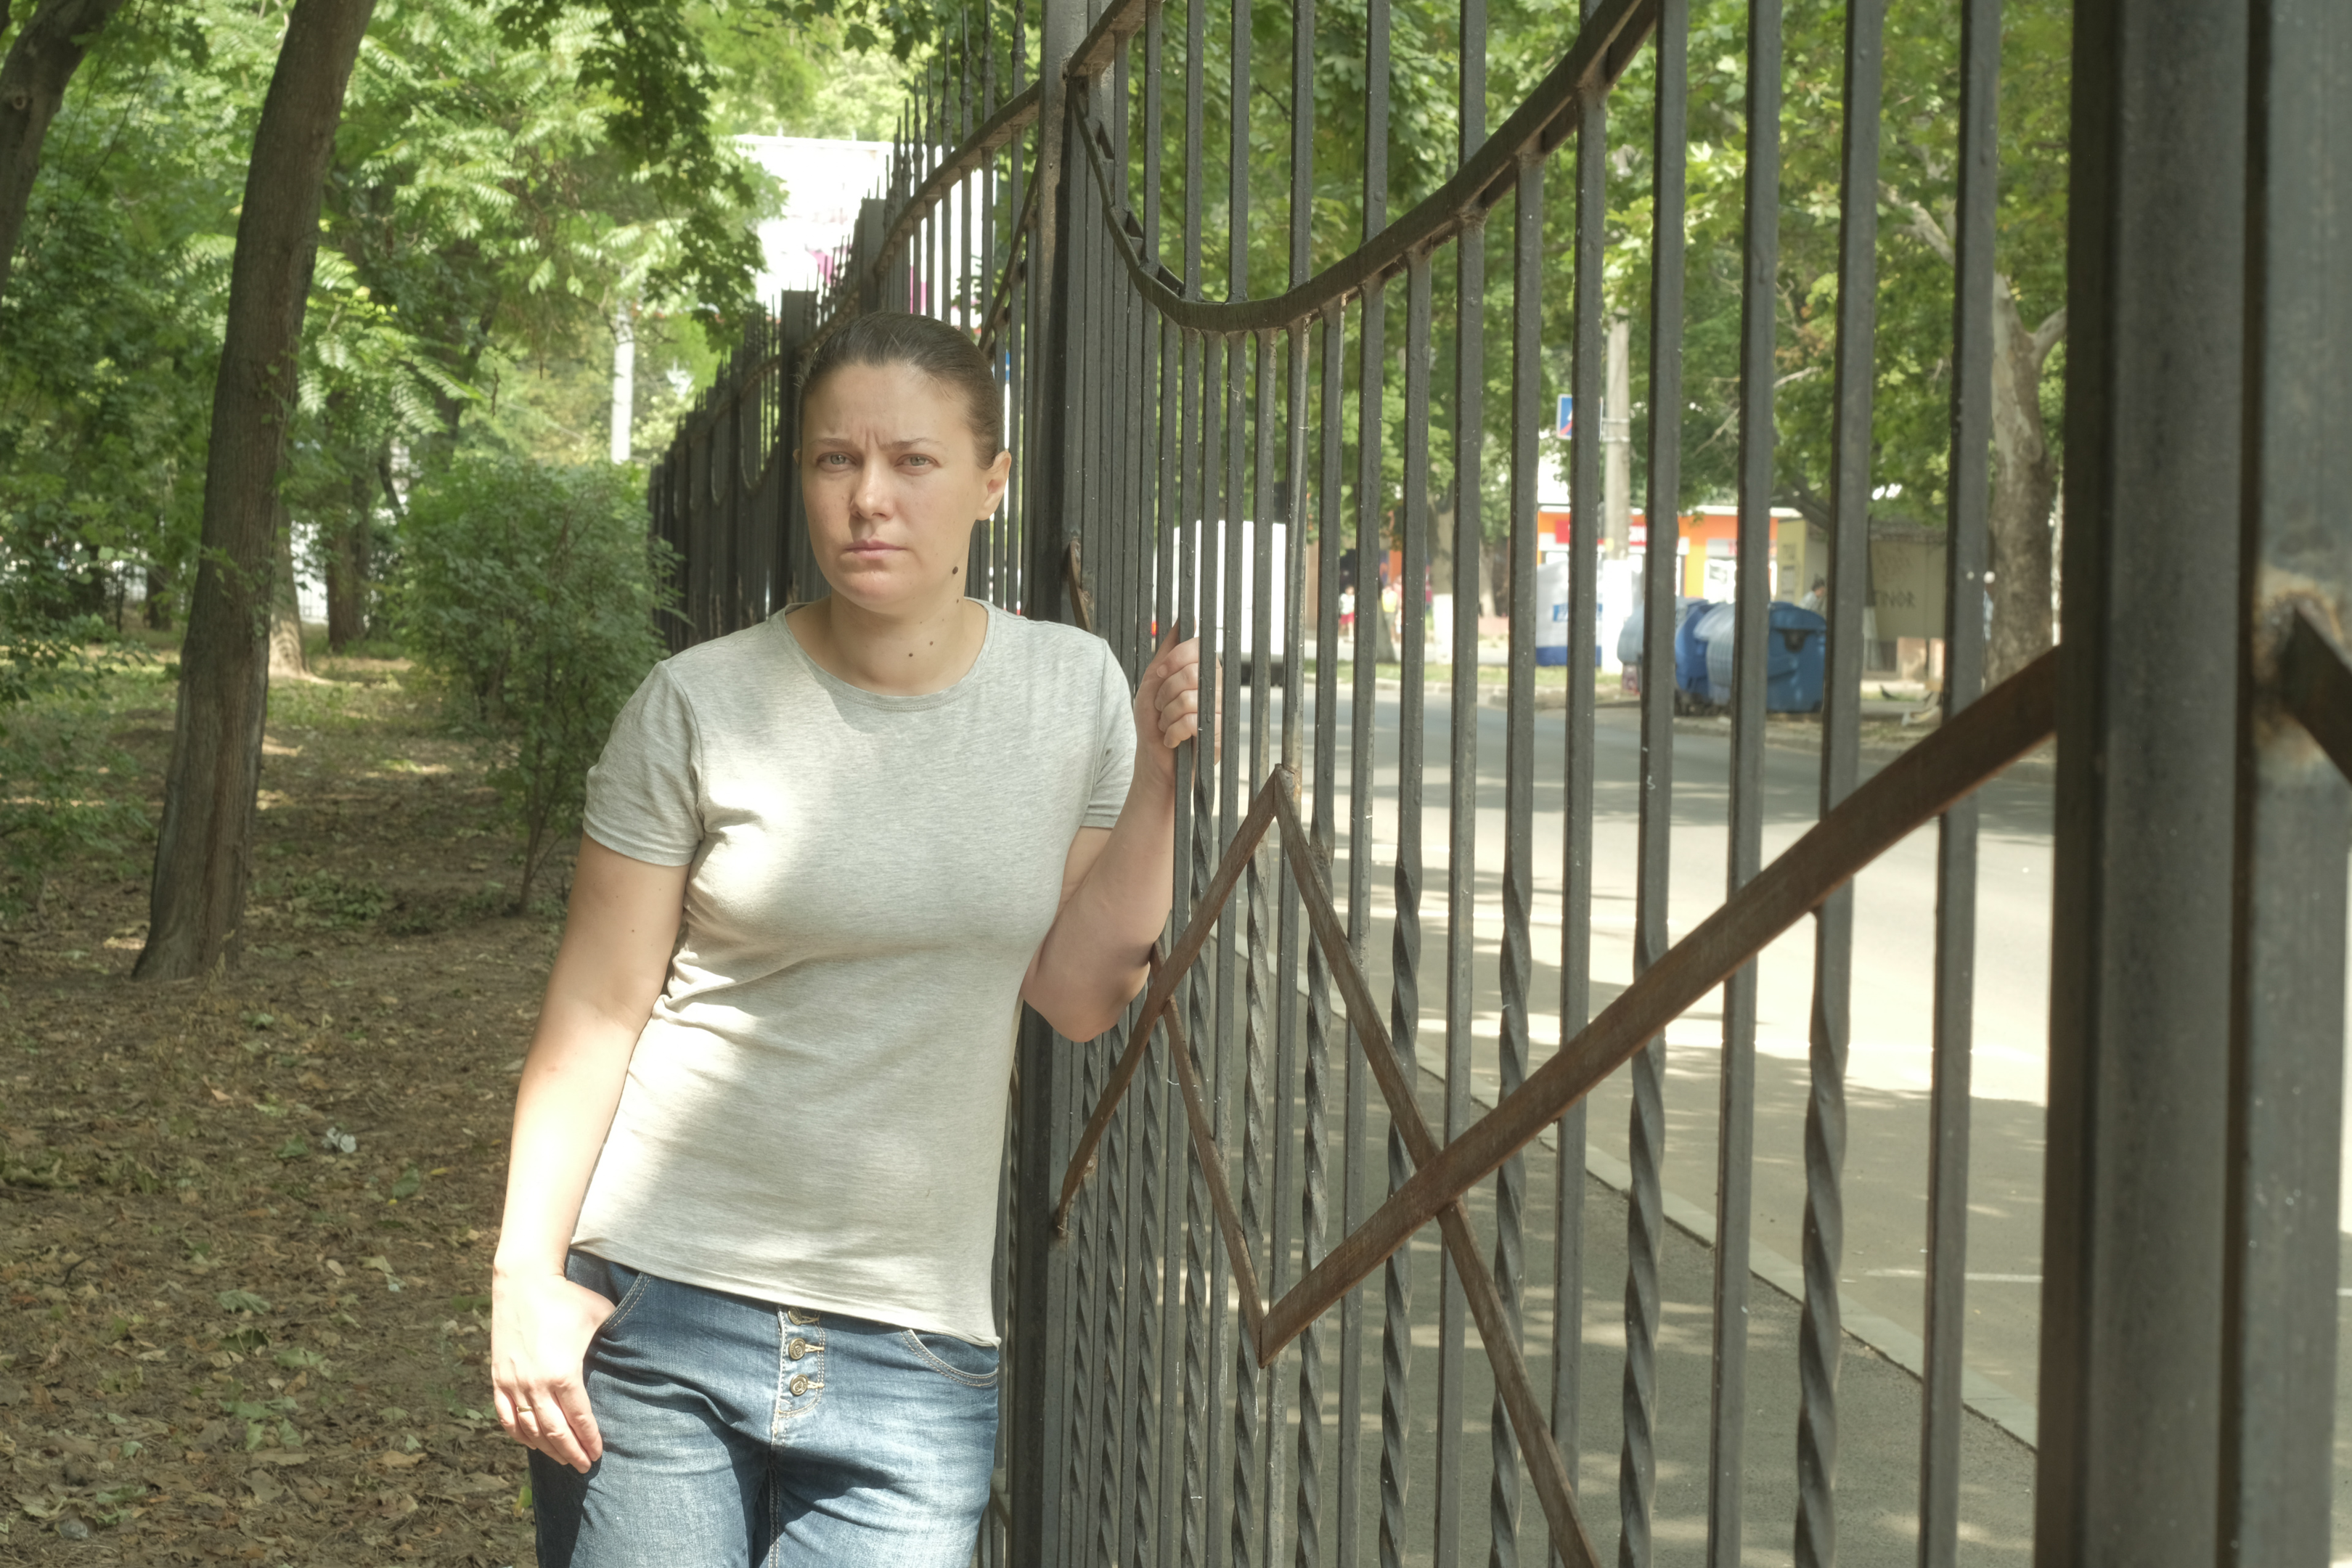 Woman leans against railings in park